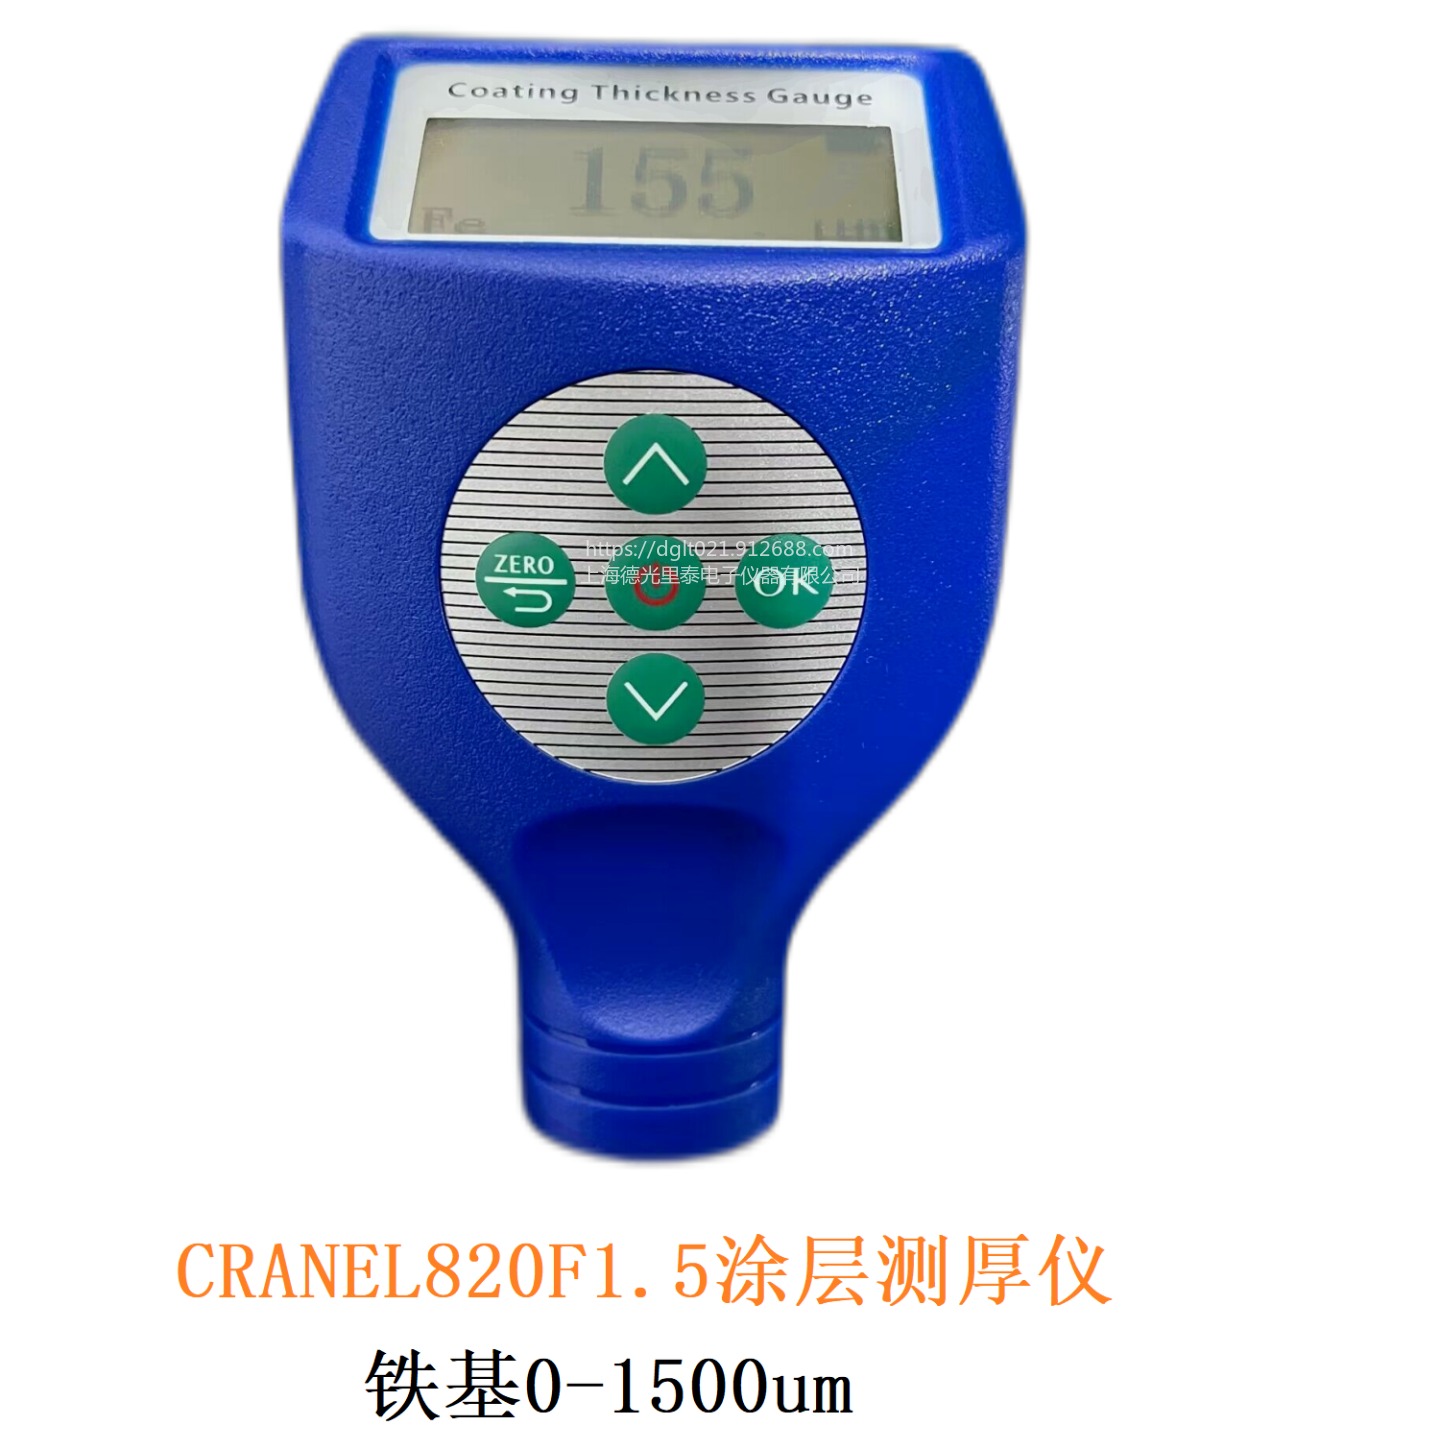 CRANEL820F1.5漆膜测厚仪 铁基一体式 0-1500um